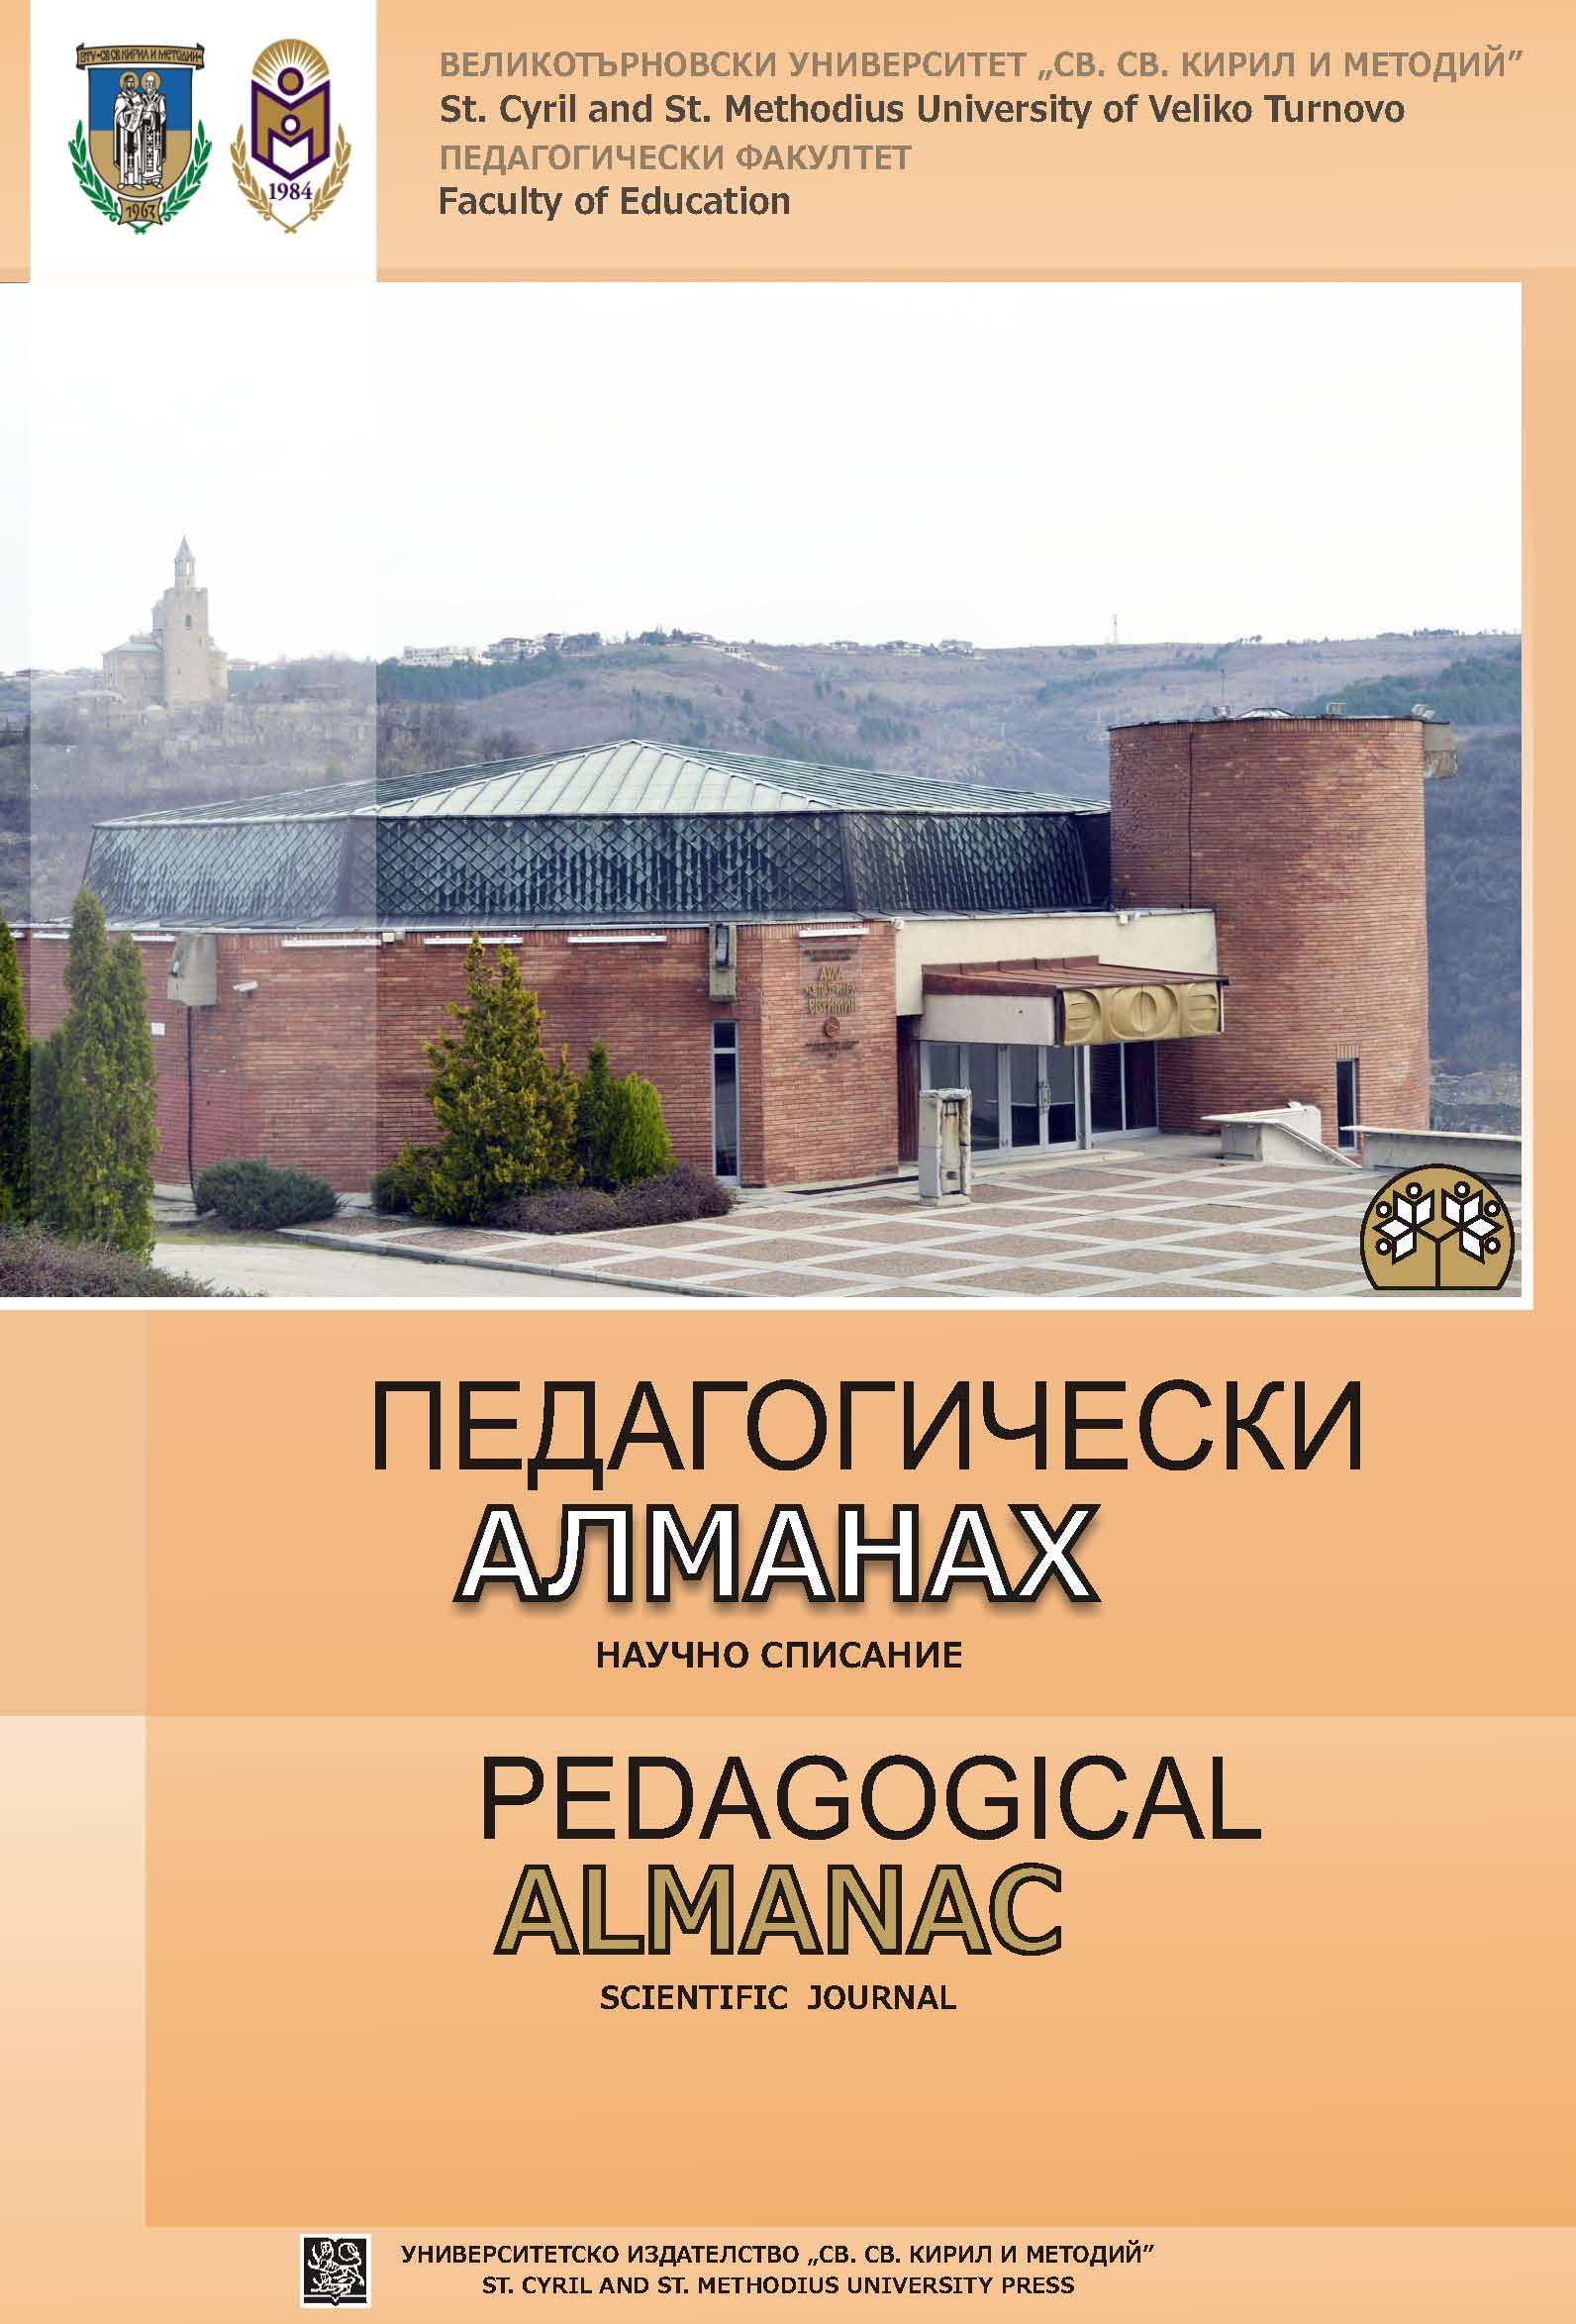 About the Reformative Life-Work of the Musical Pedagogue Boris Trichkov the author Iliana Nikolova Cover Image